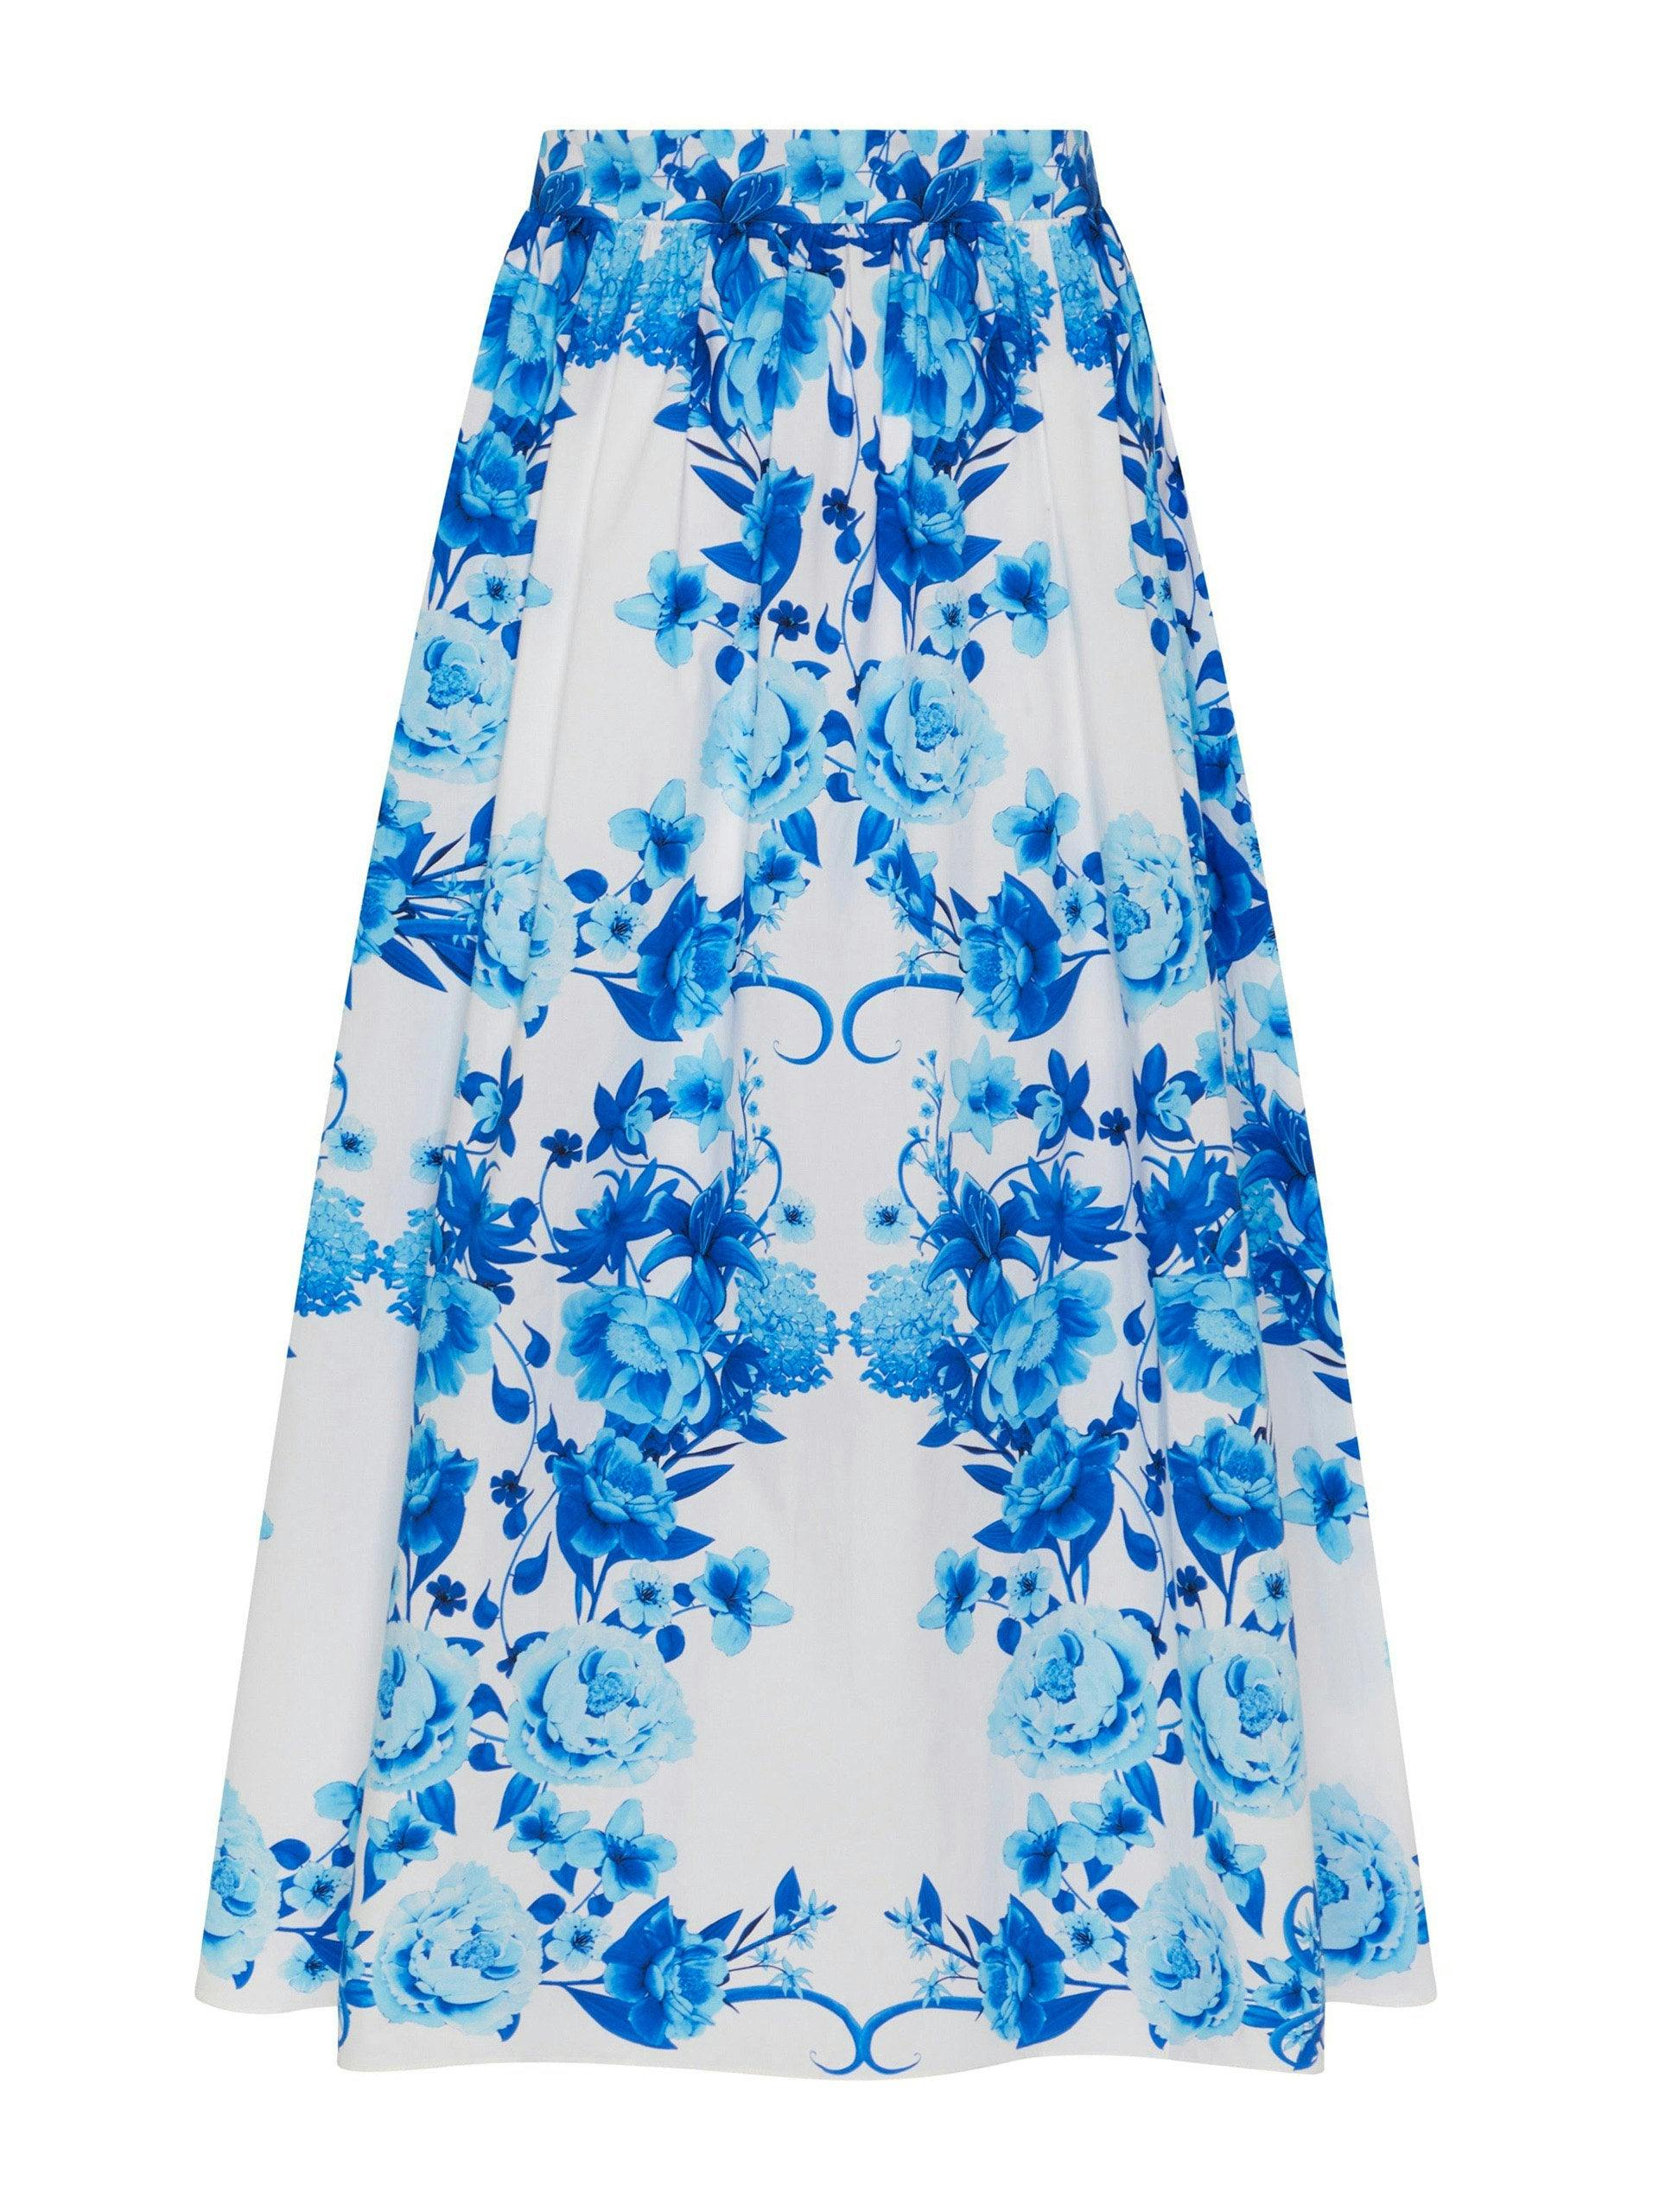 Rhea midi skirt in Antheia blue floral print